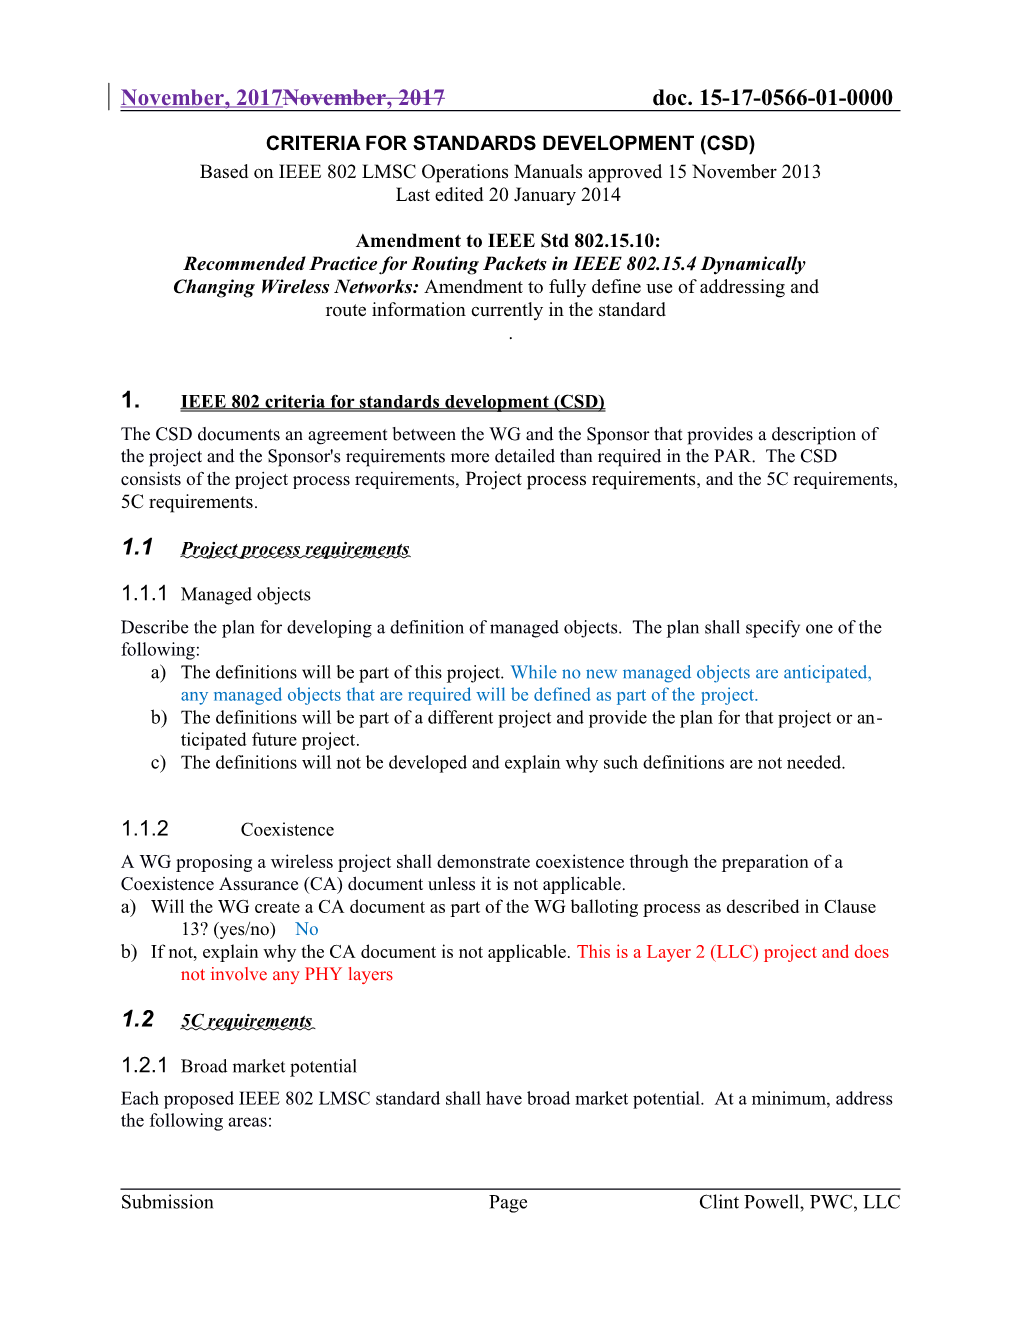 IEEE 802.15.3 RF Channelizaiton Expansion Criteria for Standard Deelopment (CSD)